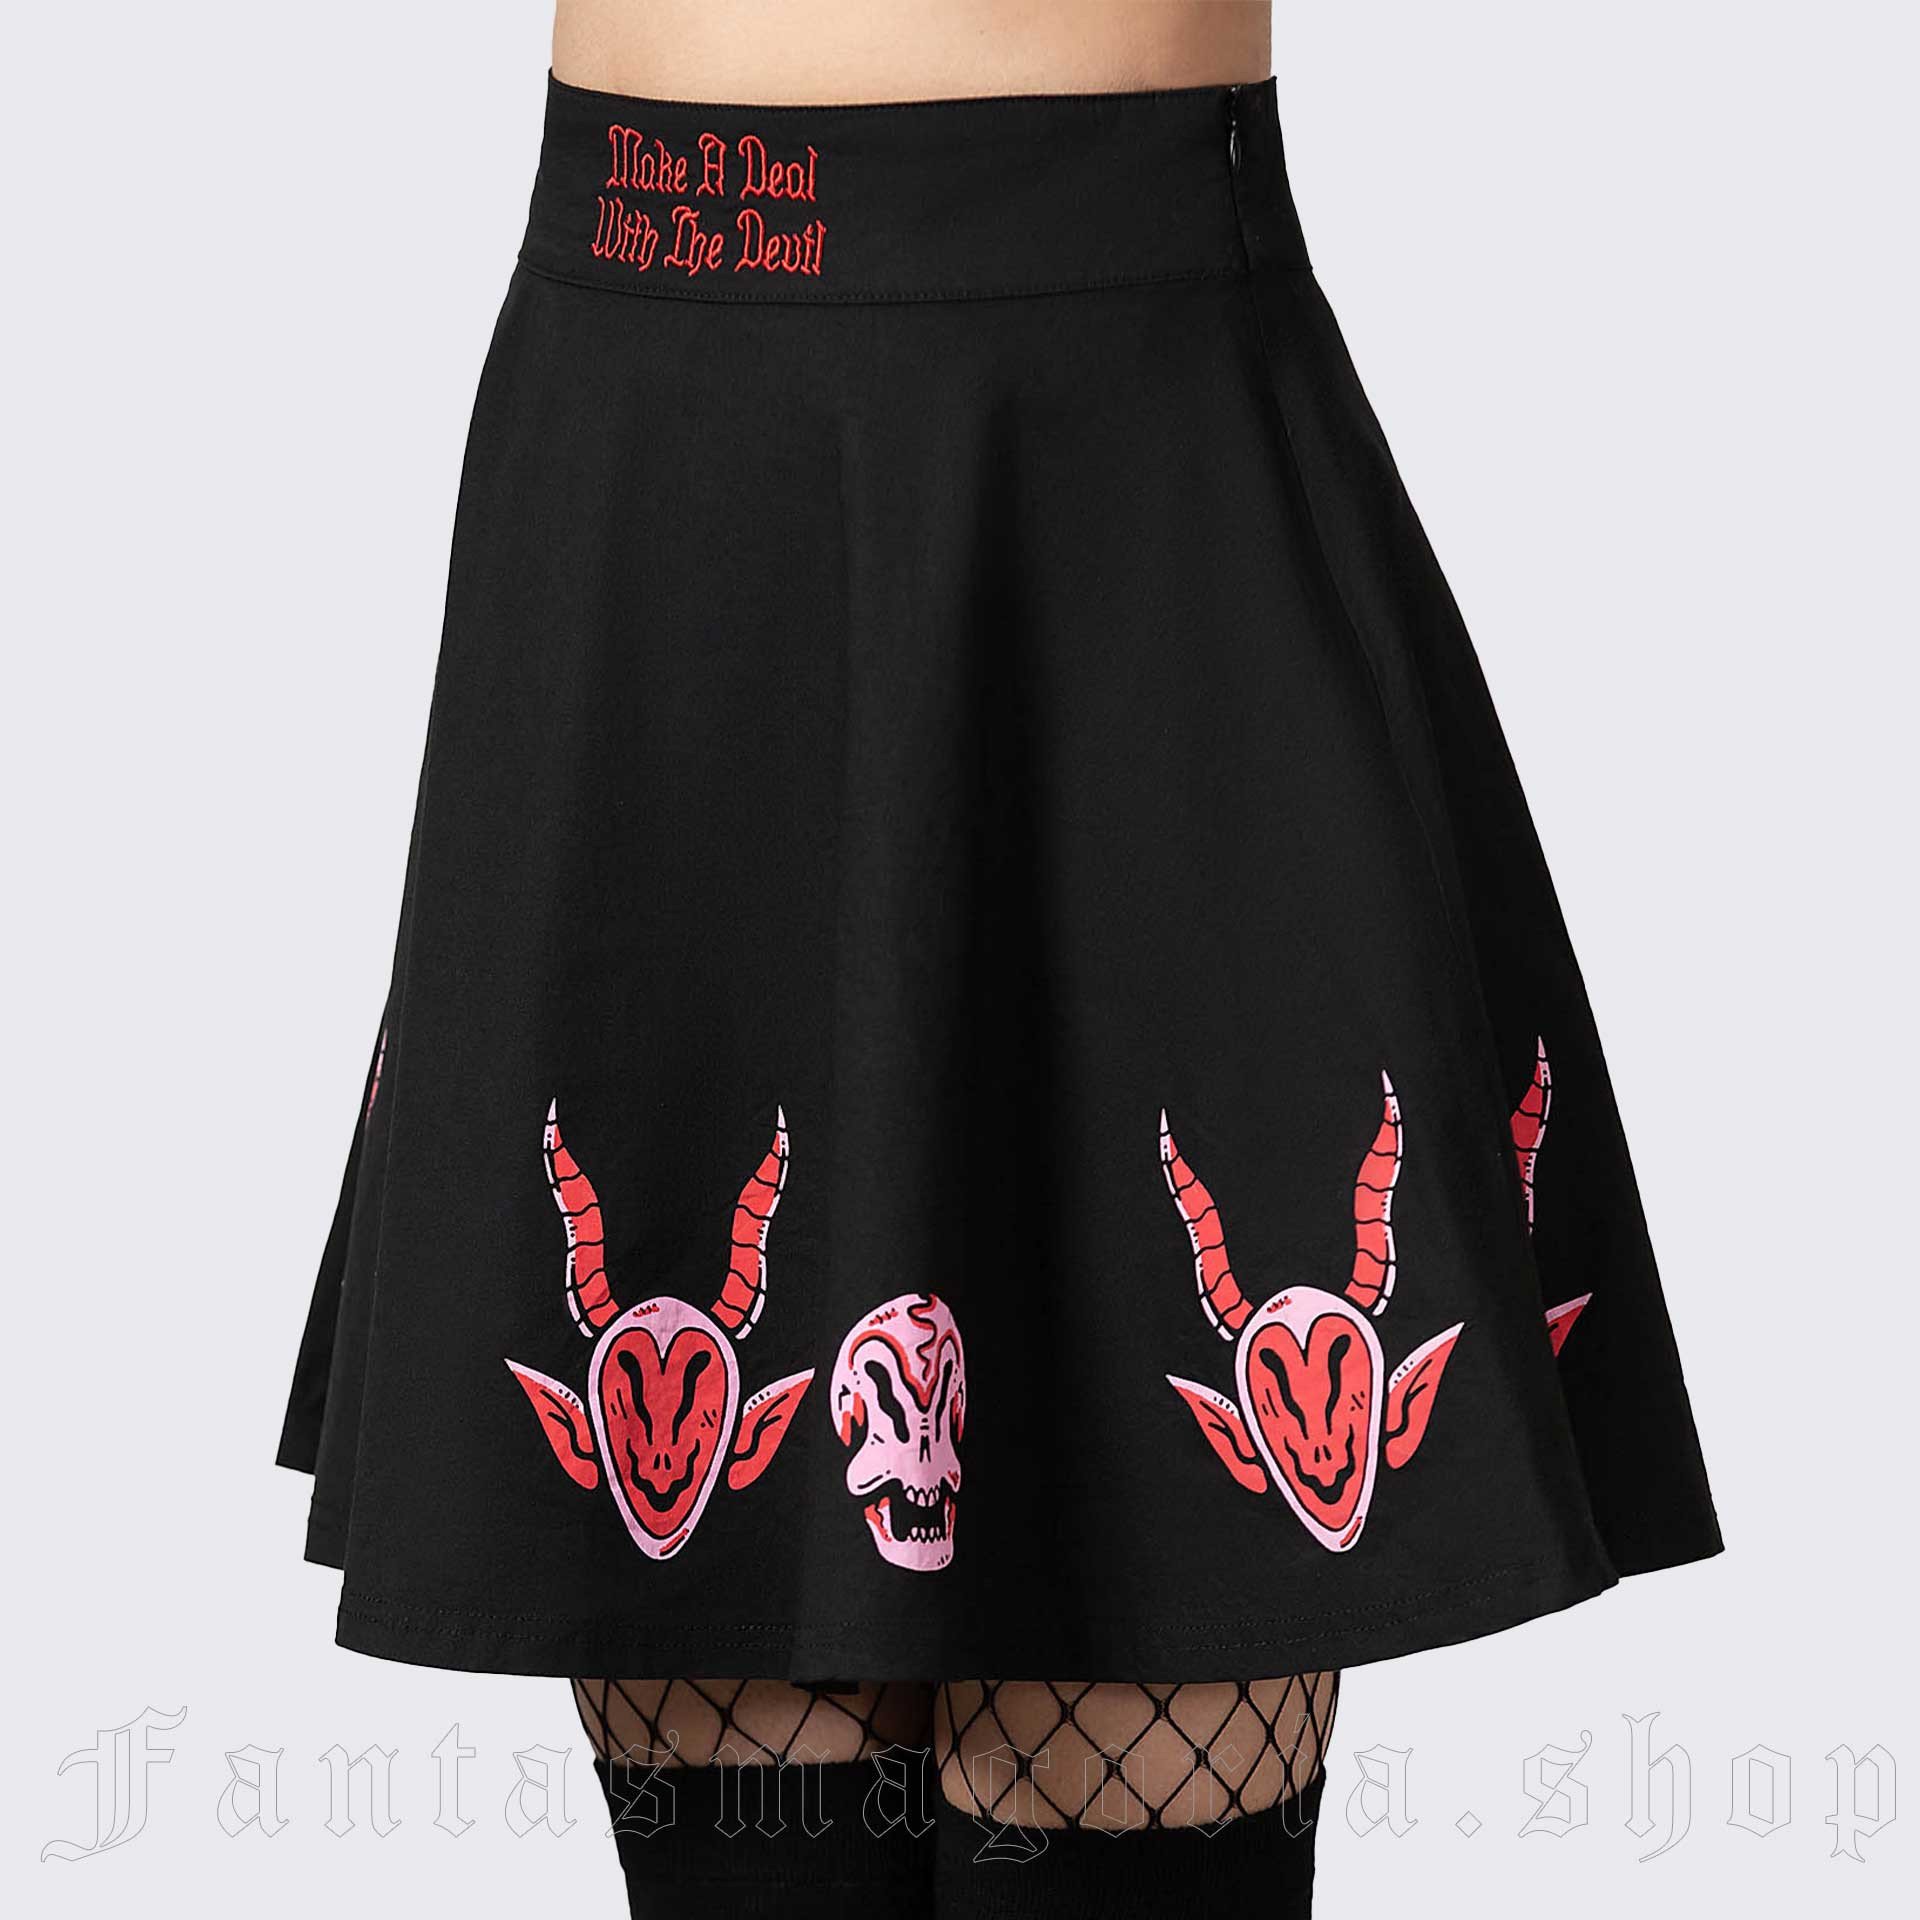 Dark Alternative Gothic Punk Rave Skirts | Largest Collection (6)